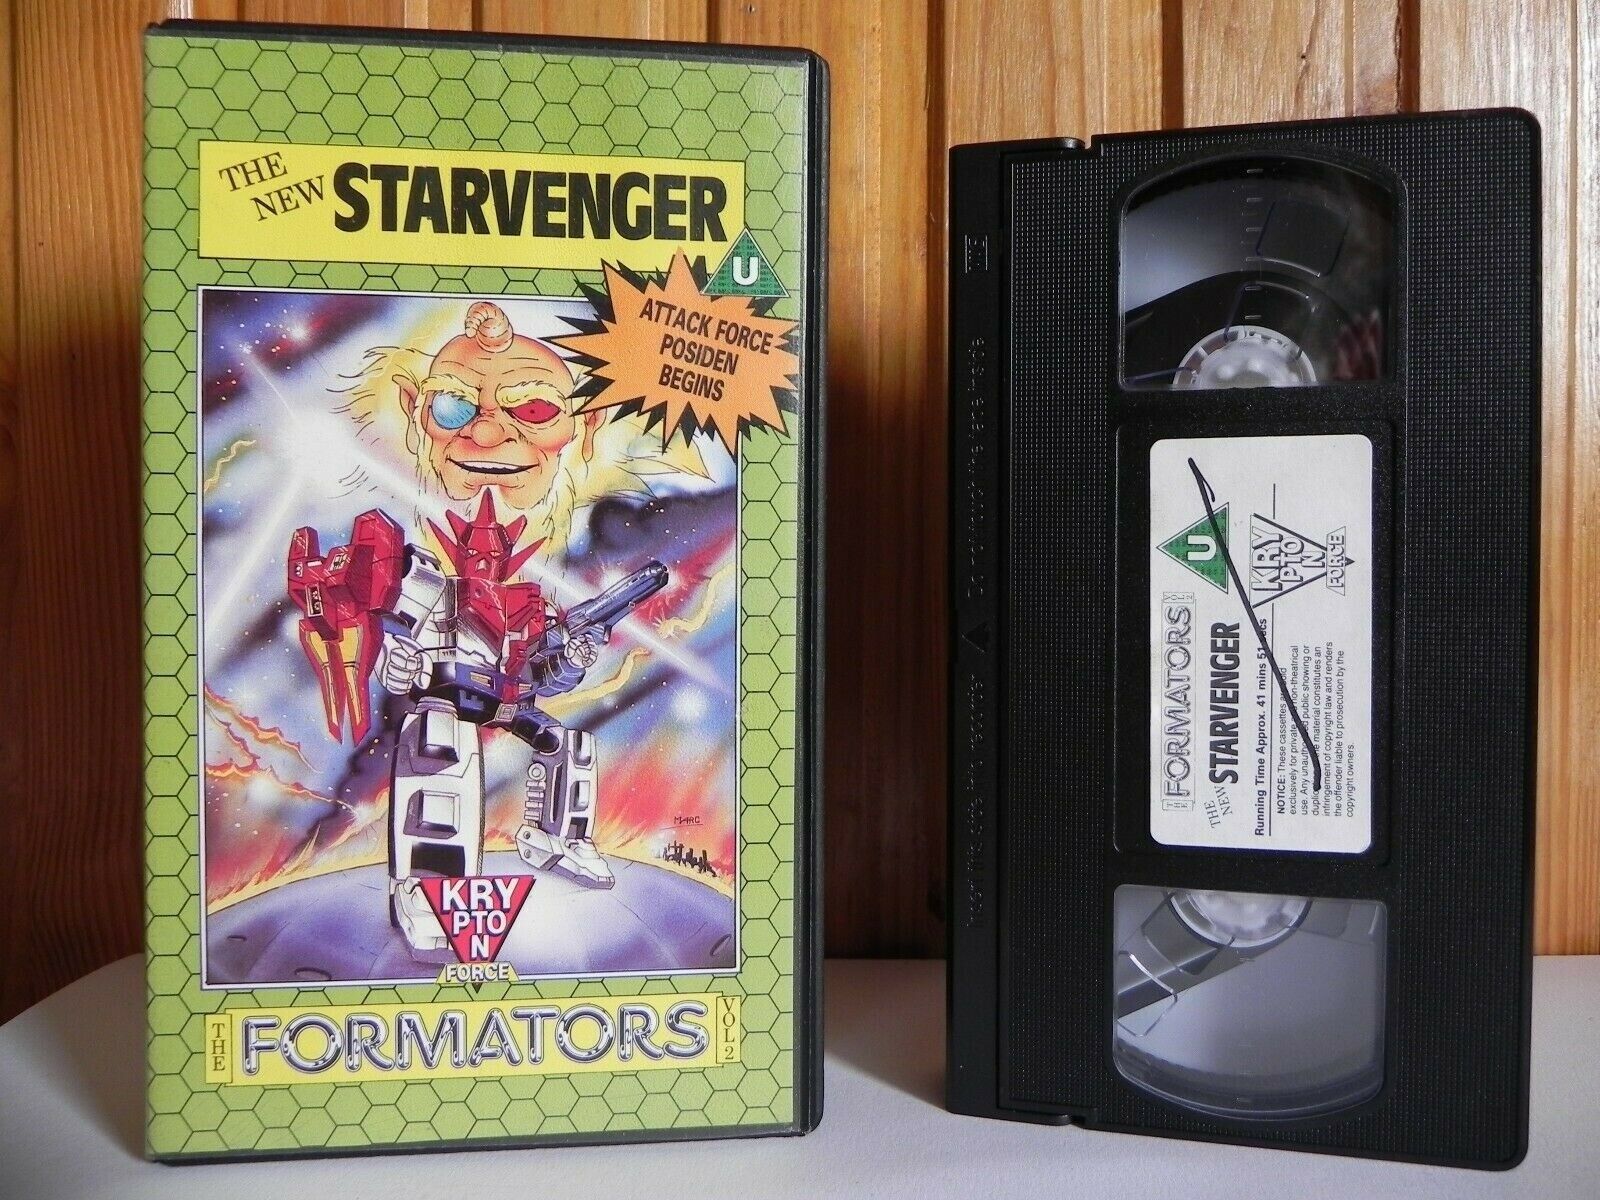 The New Starvenger - The Formators Vol 2 - Attack Force Posiden Begins - Pal VHS-